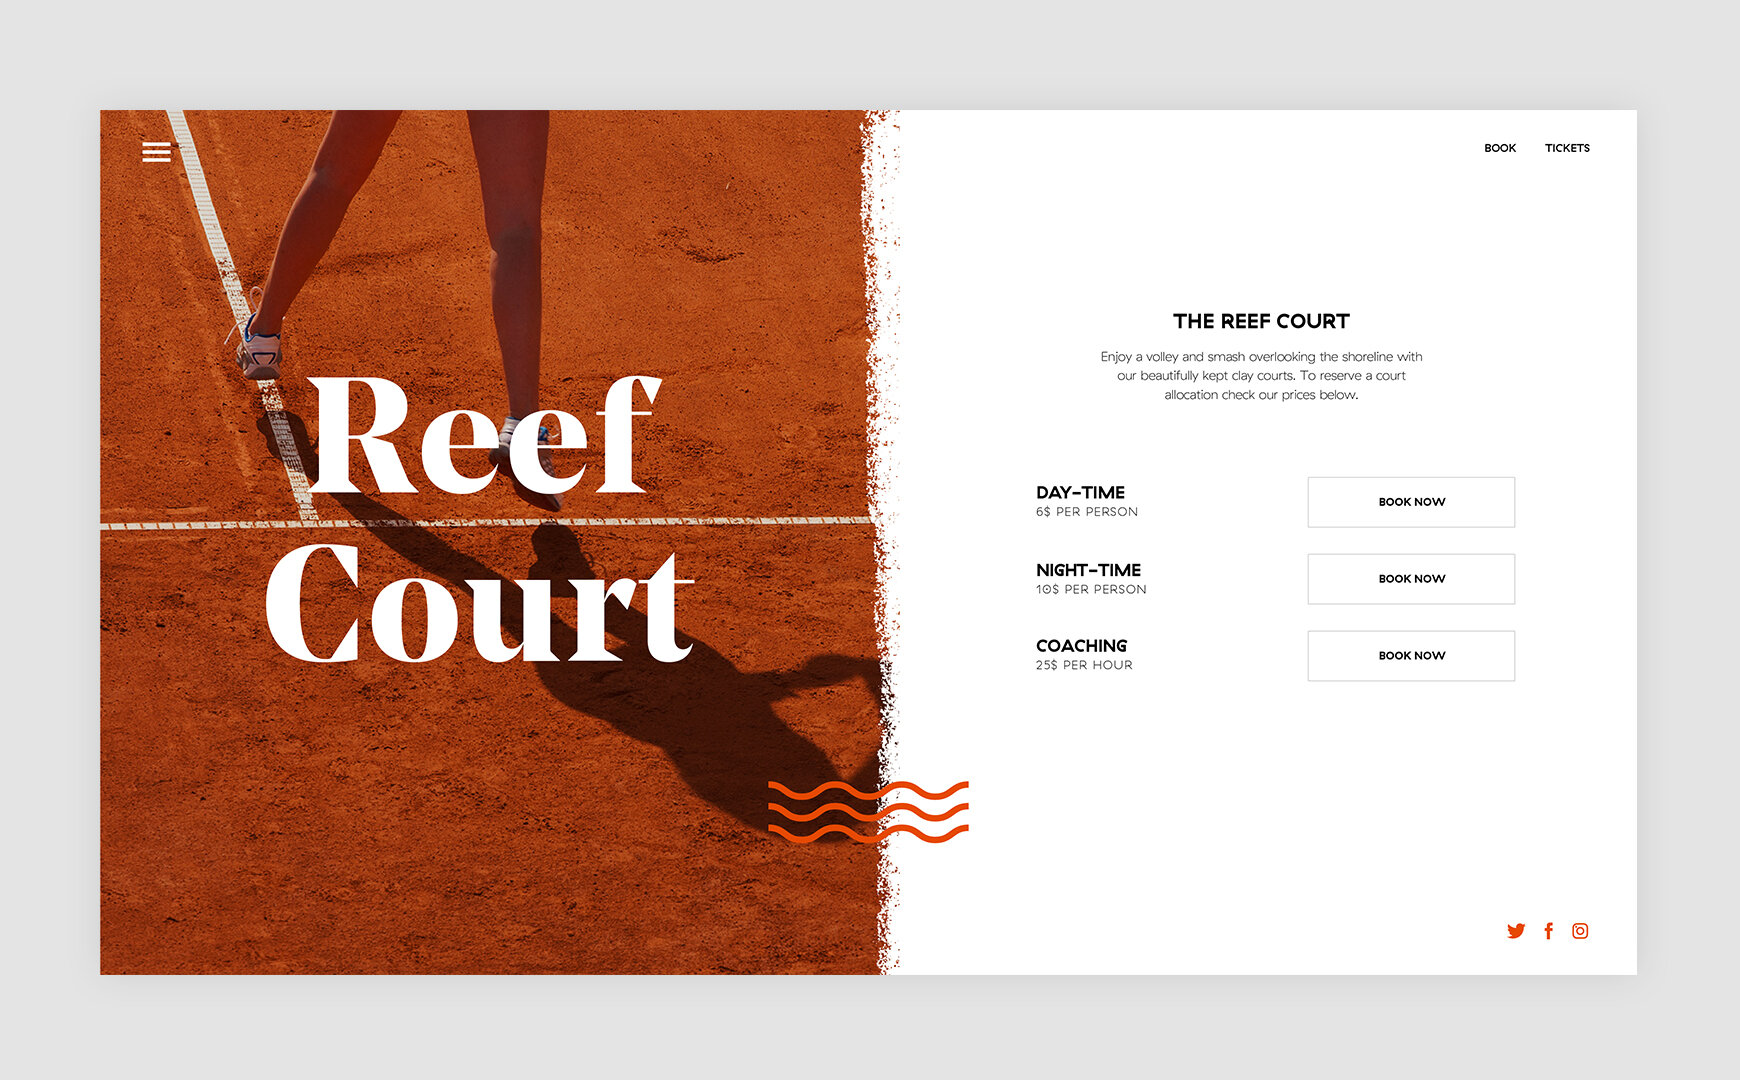 Web_Reef_Court.jpg